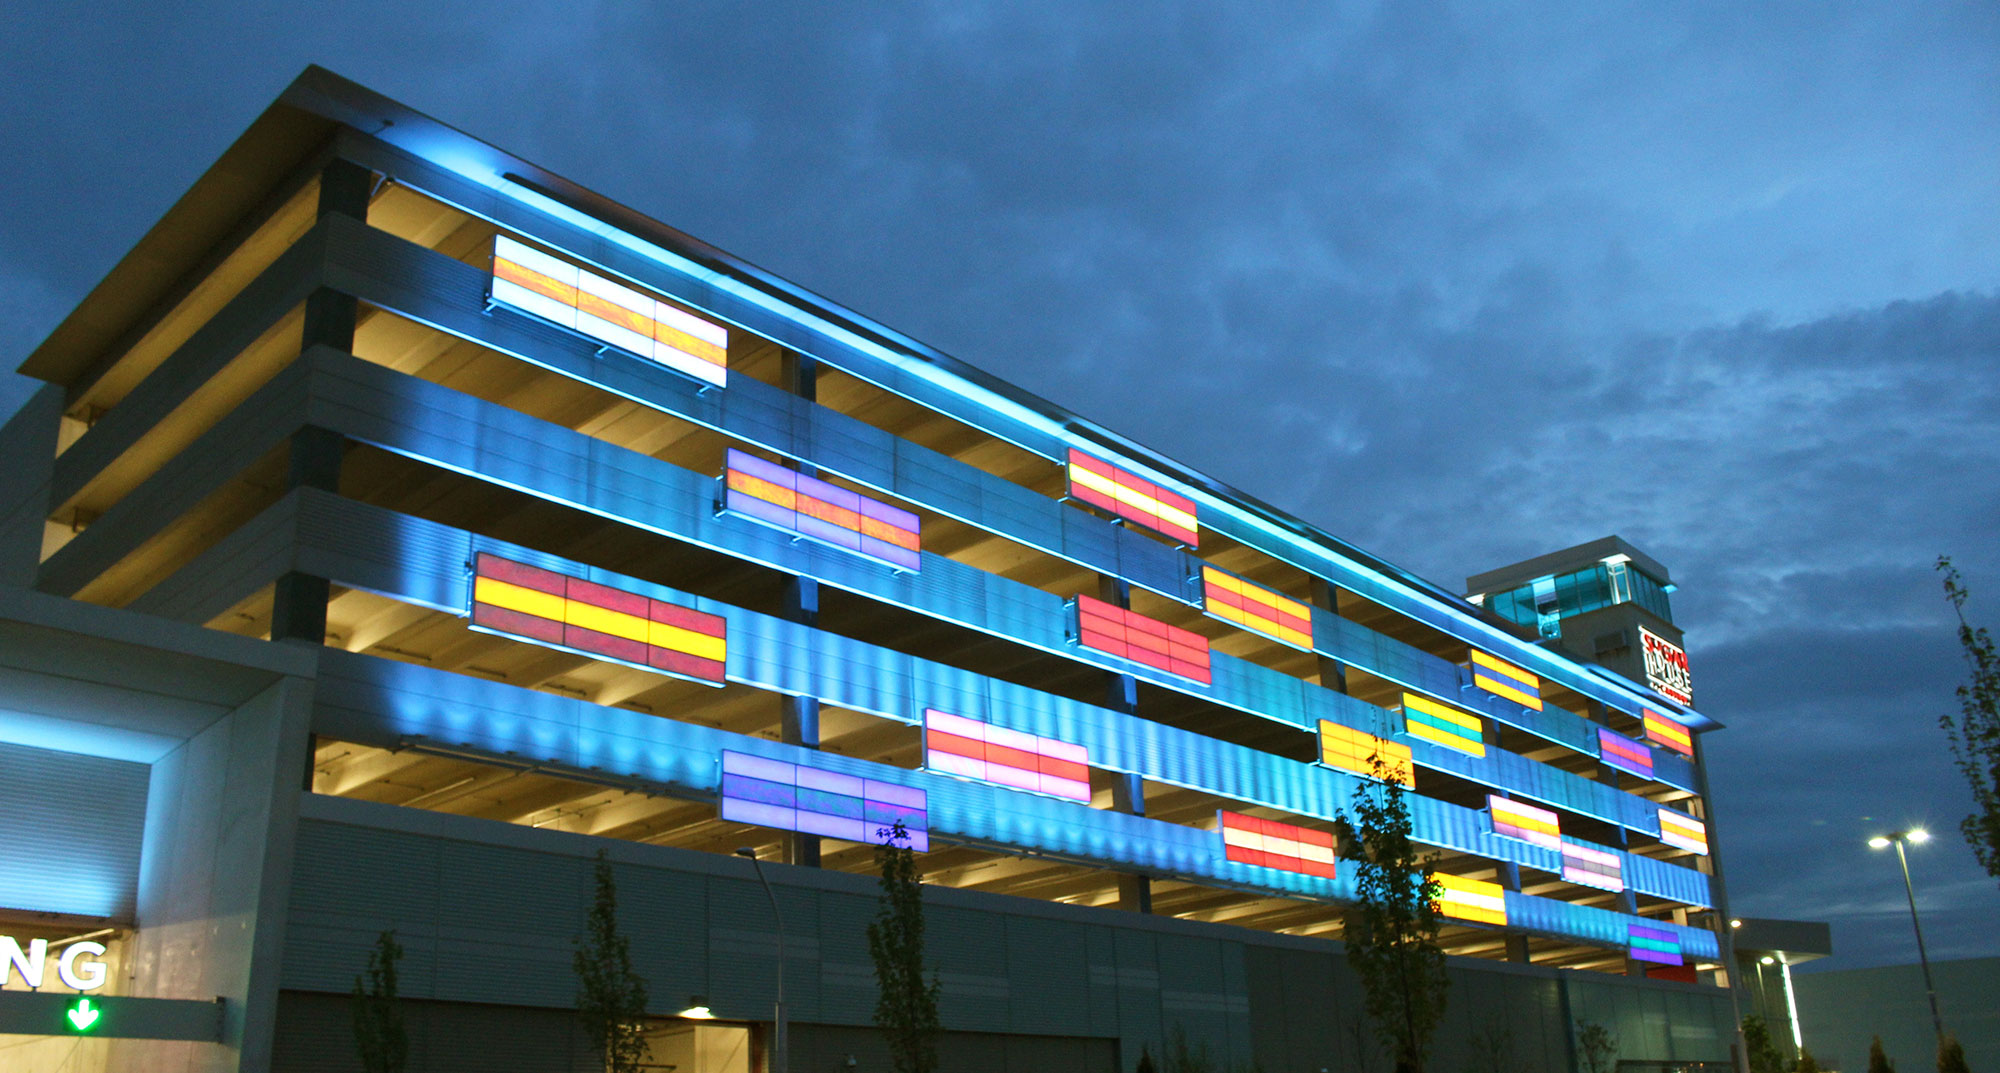 Colorful illuminated panels along a 7-story parking garage at night